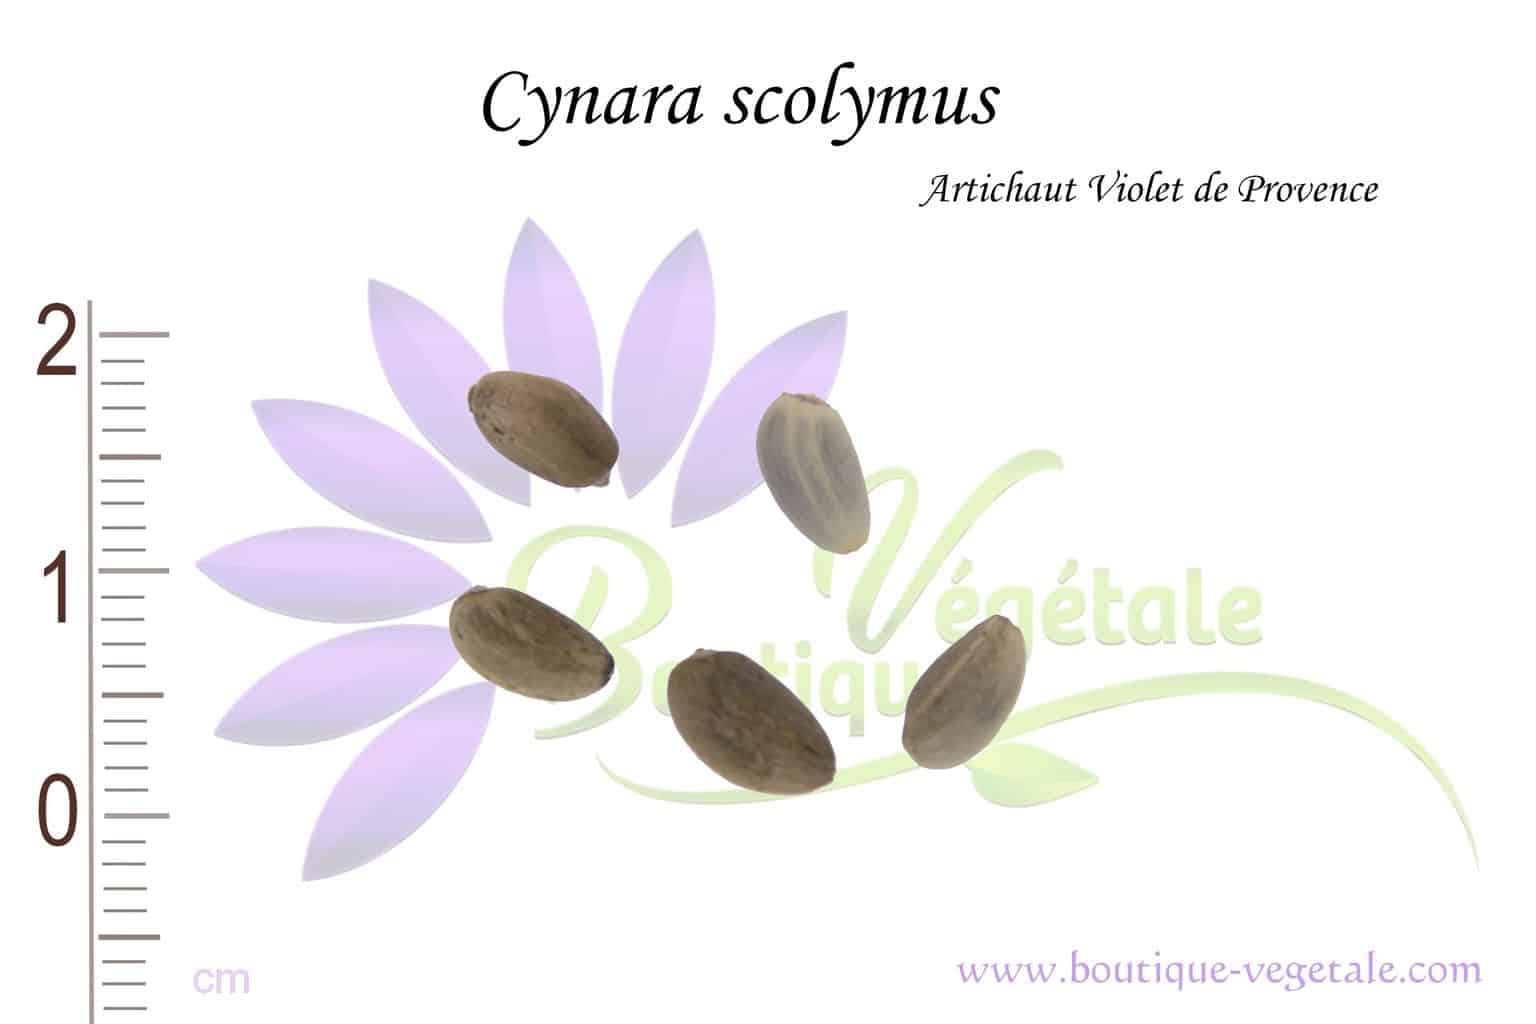 10 graines LEG-0042 Cynara scolymus ARTICHAUT Violet de Provence